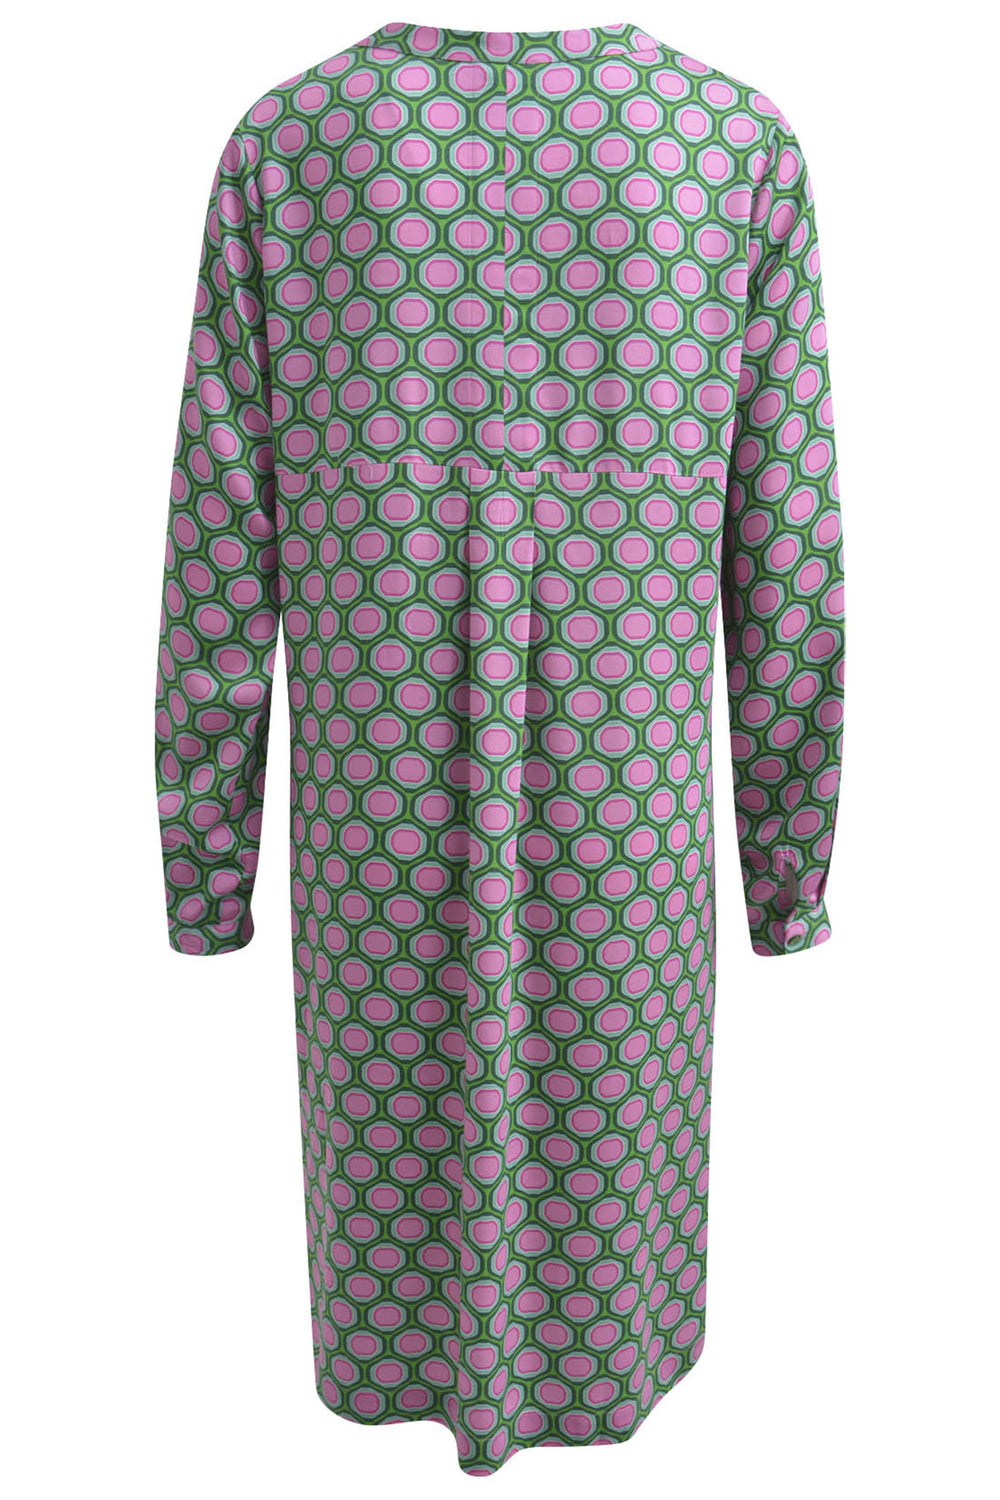 Milano 41-6240-1282 Kiwi Green Geometric Print Dress - Dotique